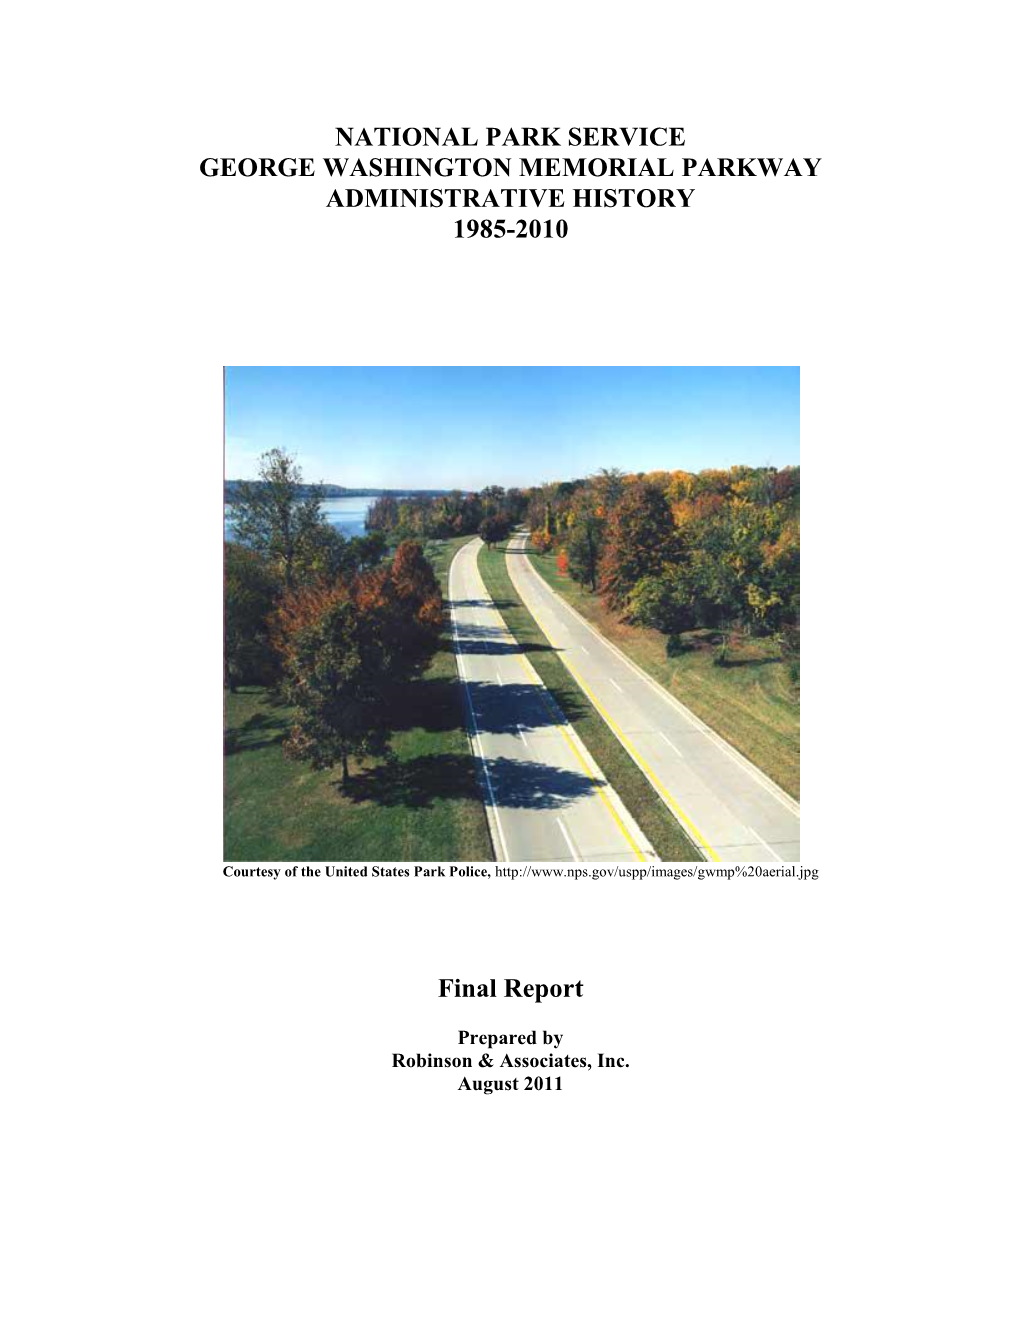 George Washington Memorial Parkway Administrative History 1985-2010